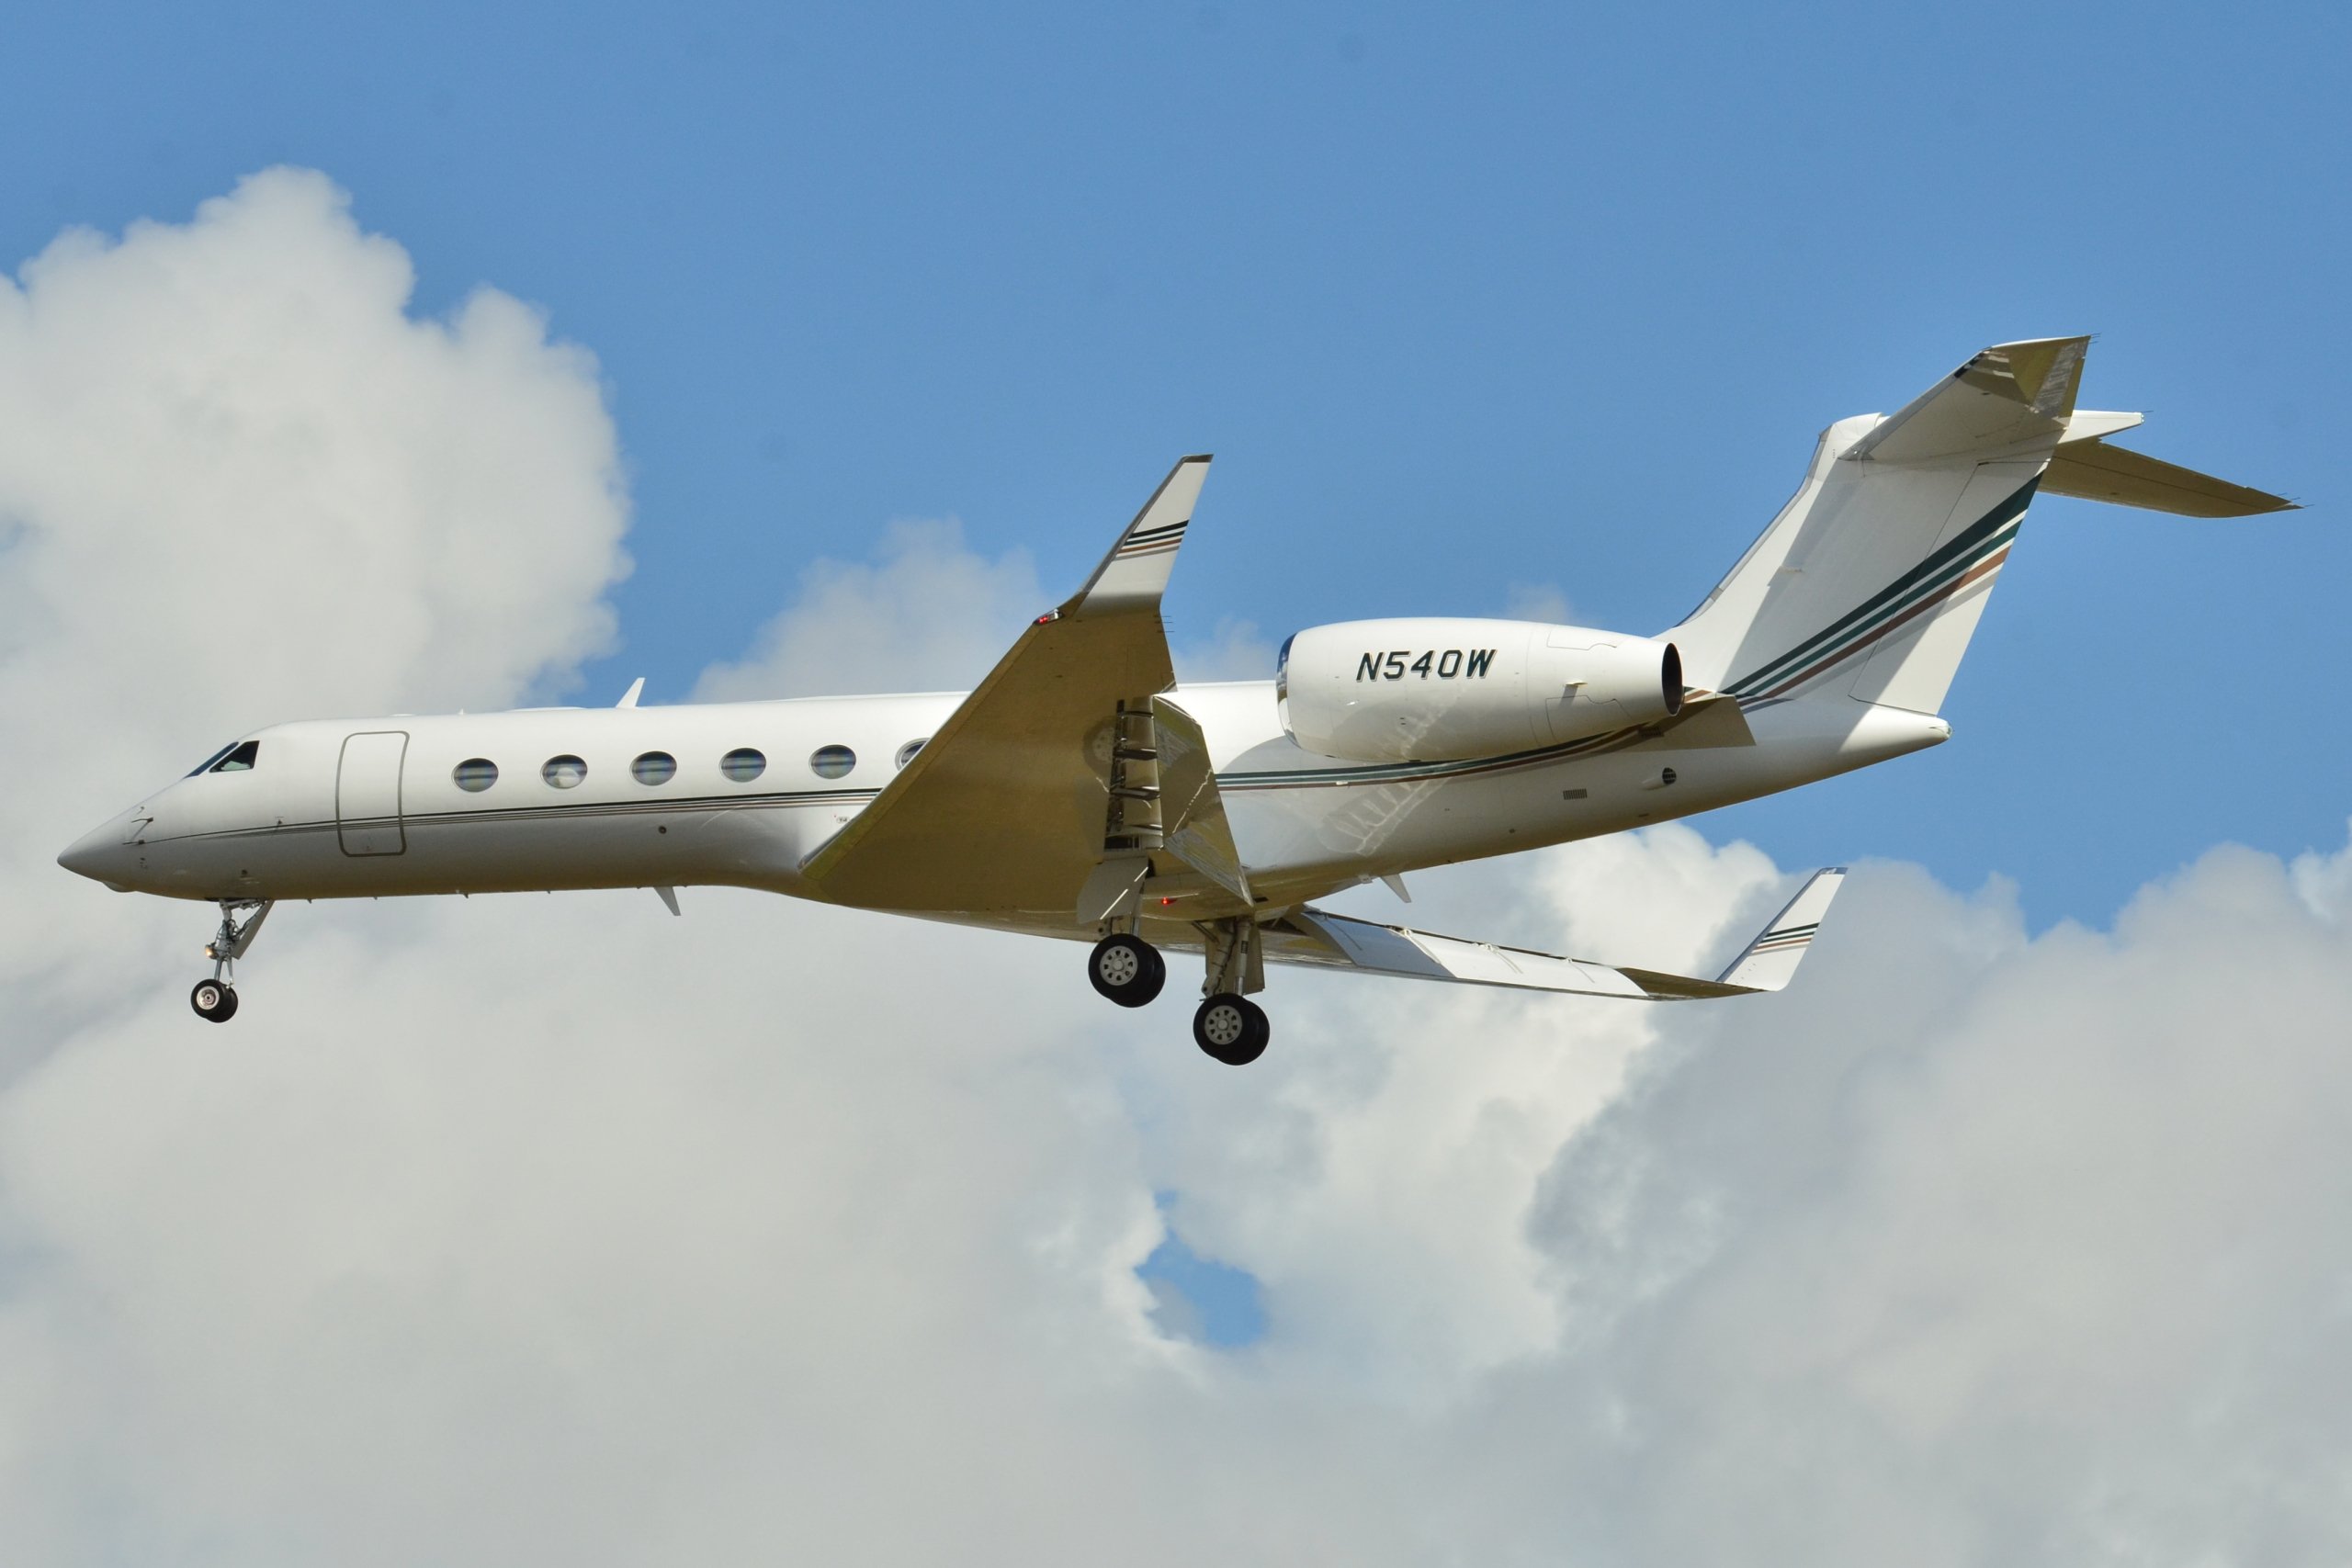 OPRAH WINFREY - Valor neto de 2.600 millones de dólares - Gulfstream G650  - Jet privado - N540W - Casa